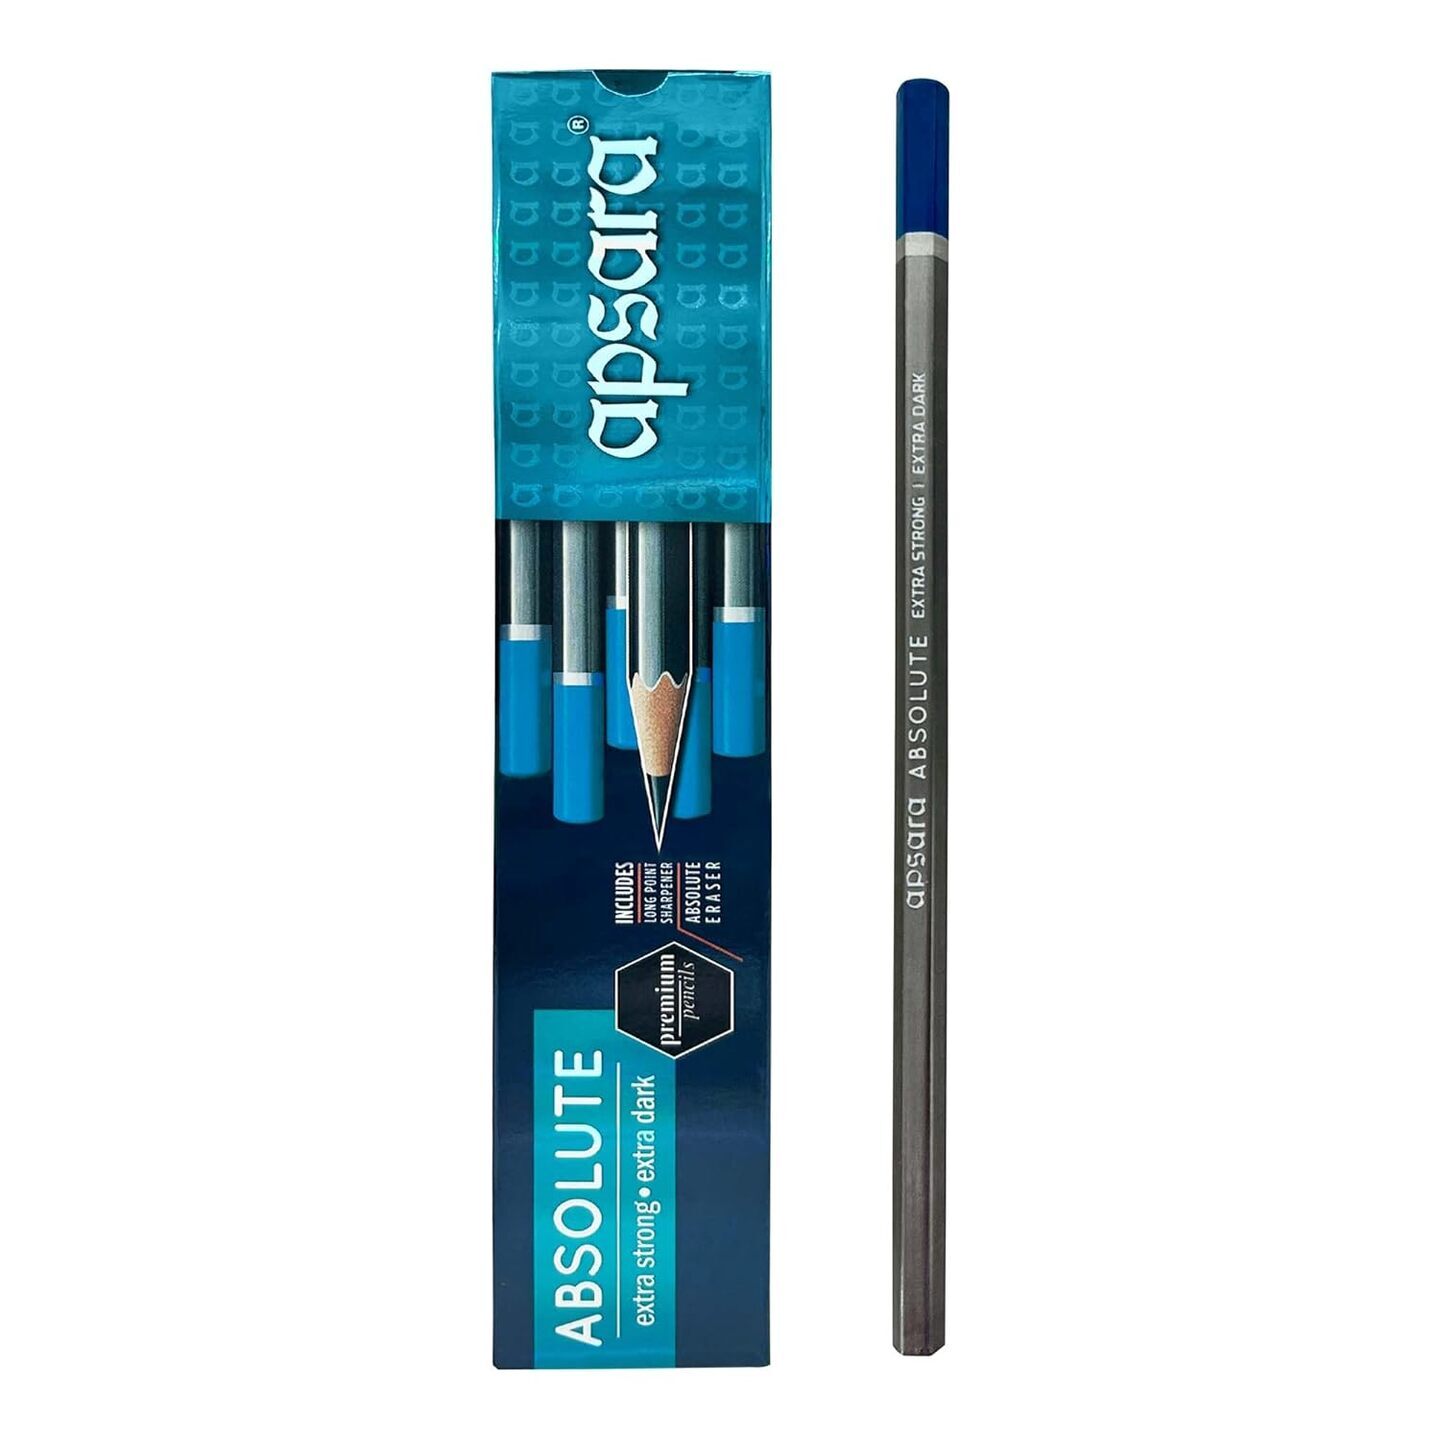 Apsara Absolute Extra Dark Pack Of 10 Premium Pencils with free sharpener & eraser